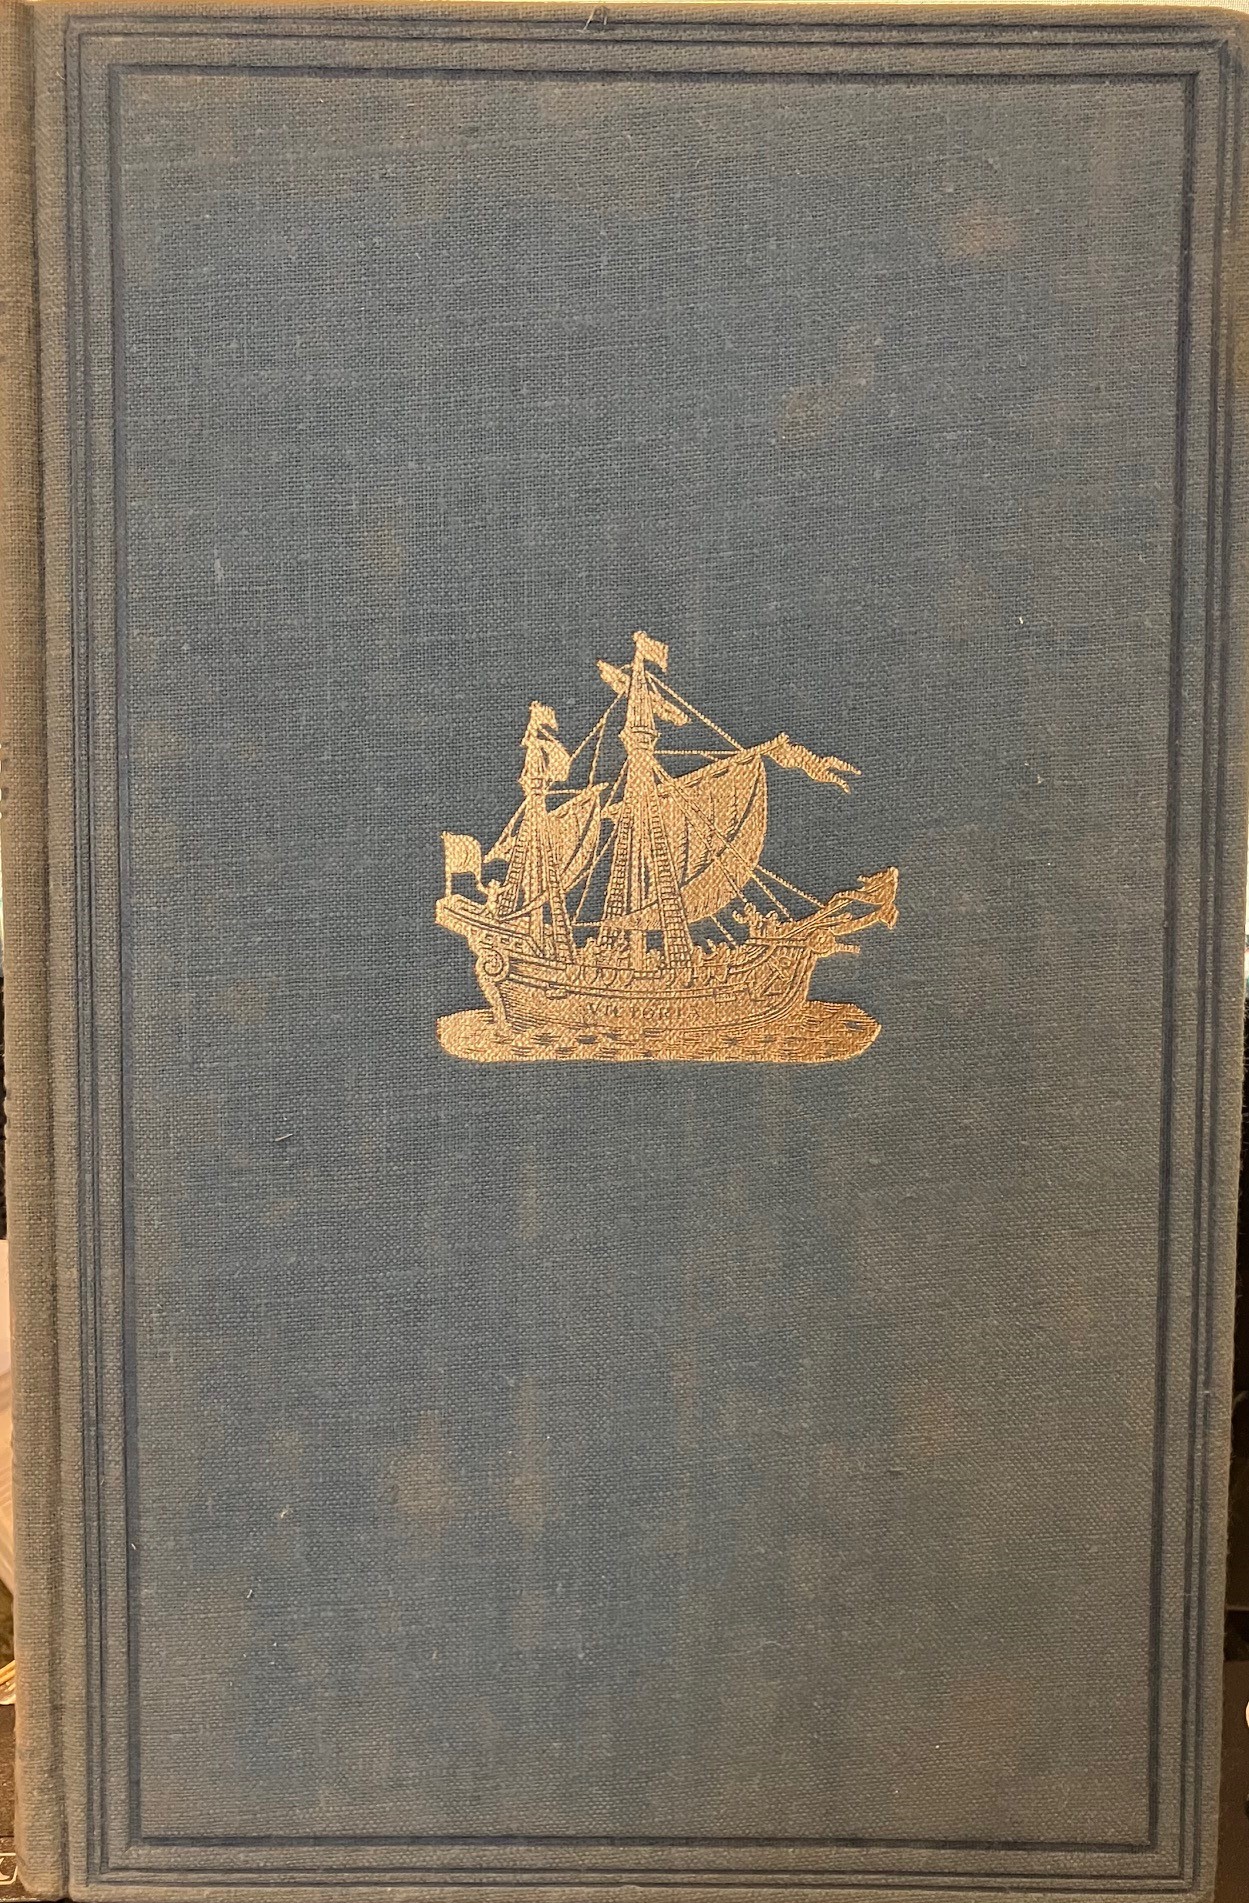 The Jamestown Voyages 1606-1609 Volume II